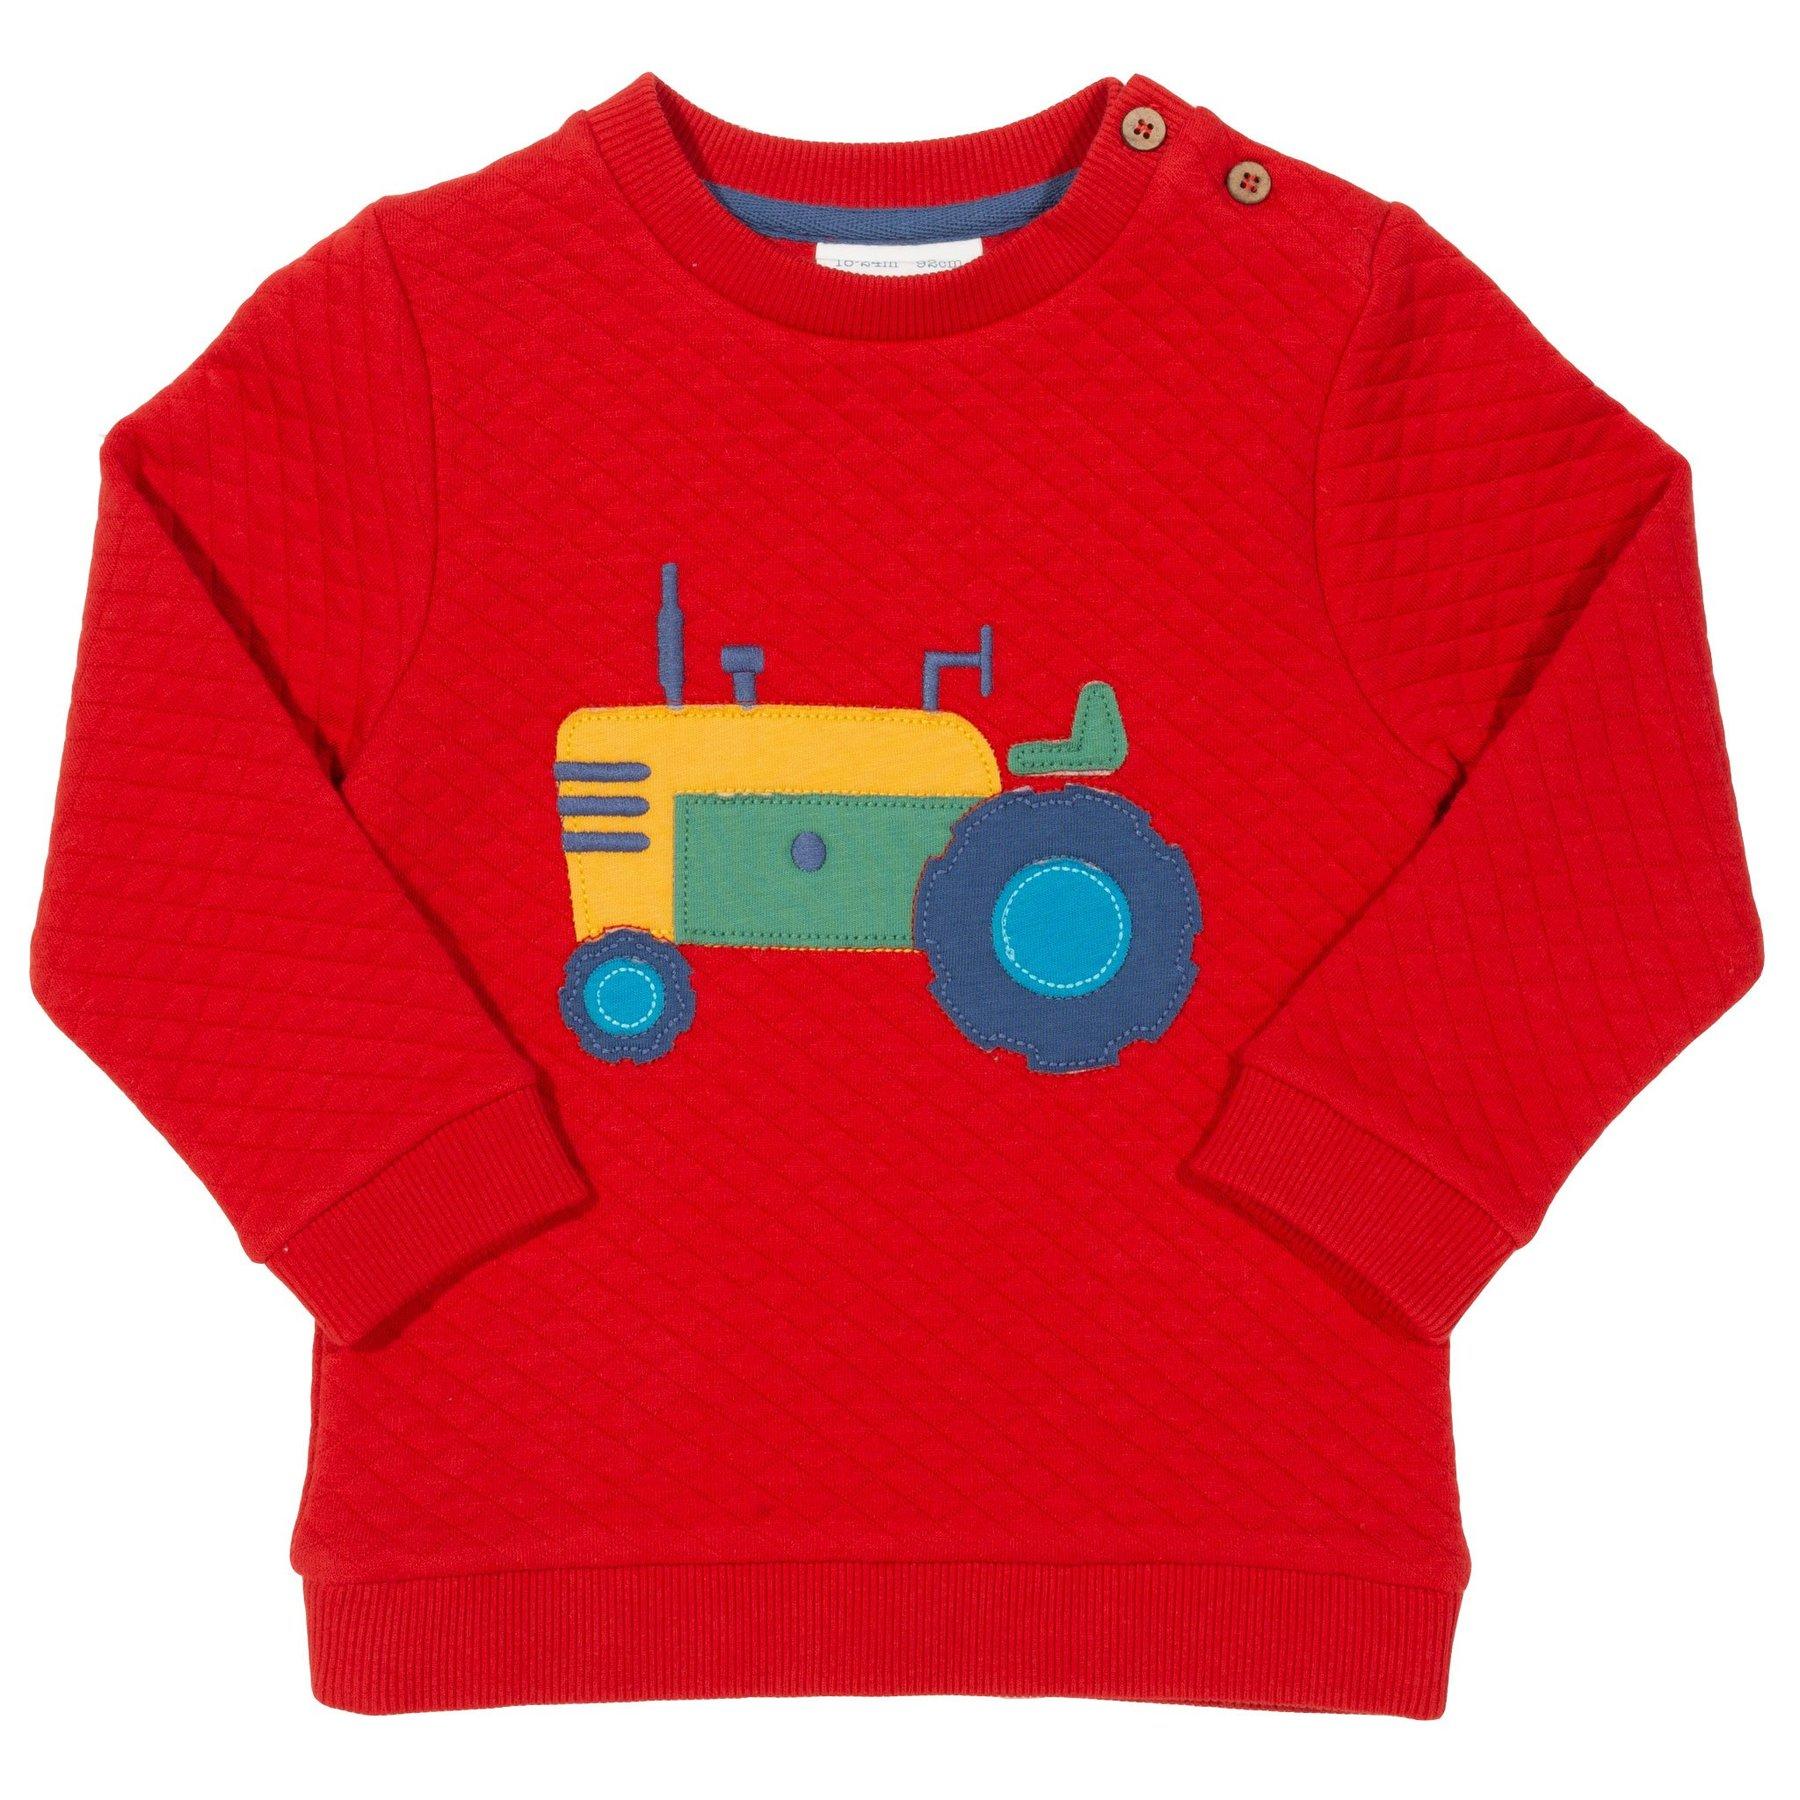 Kite Clothing Tractor Sweatshirt front